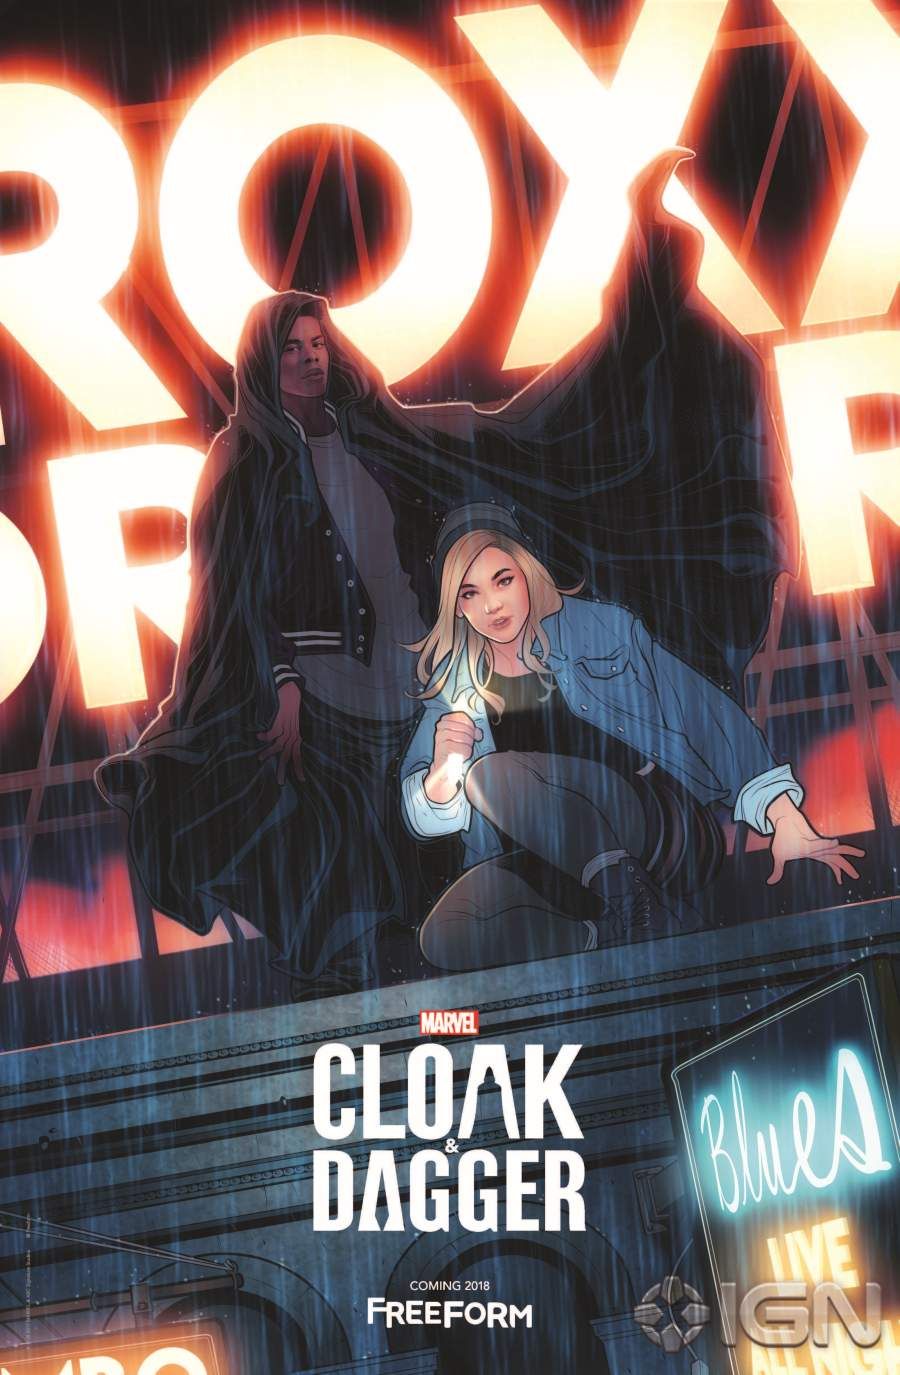 Cloak  Dagger releases on Freeform in 2018.